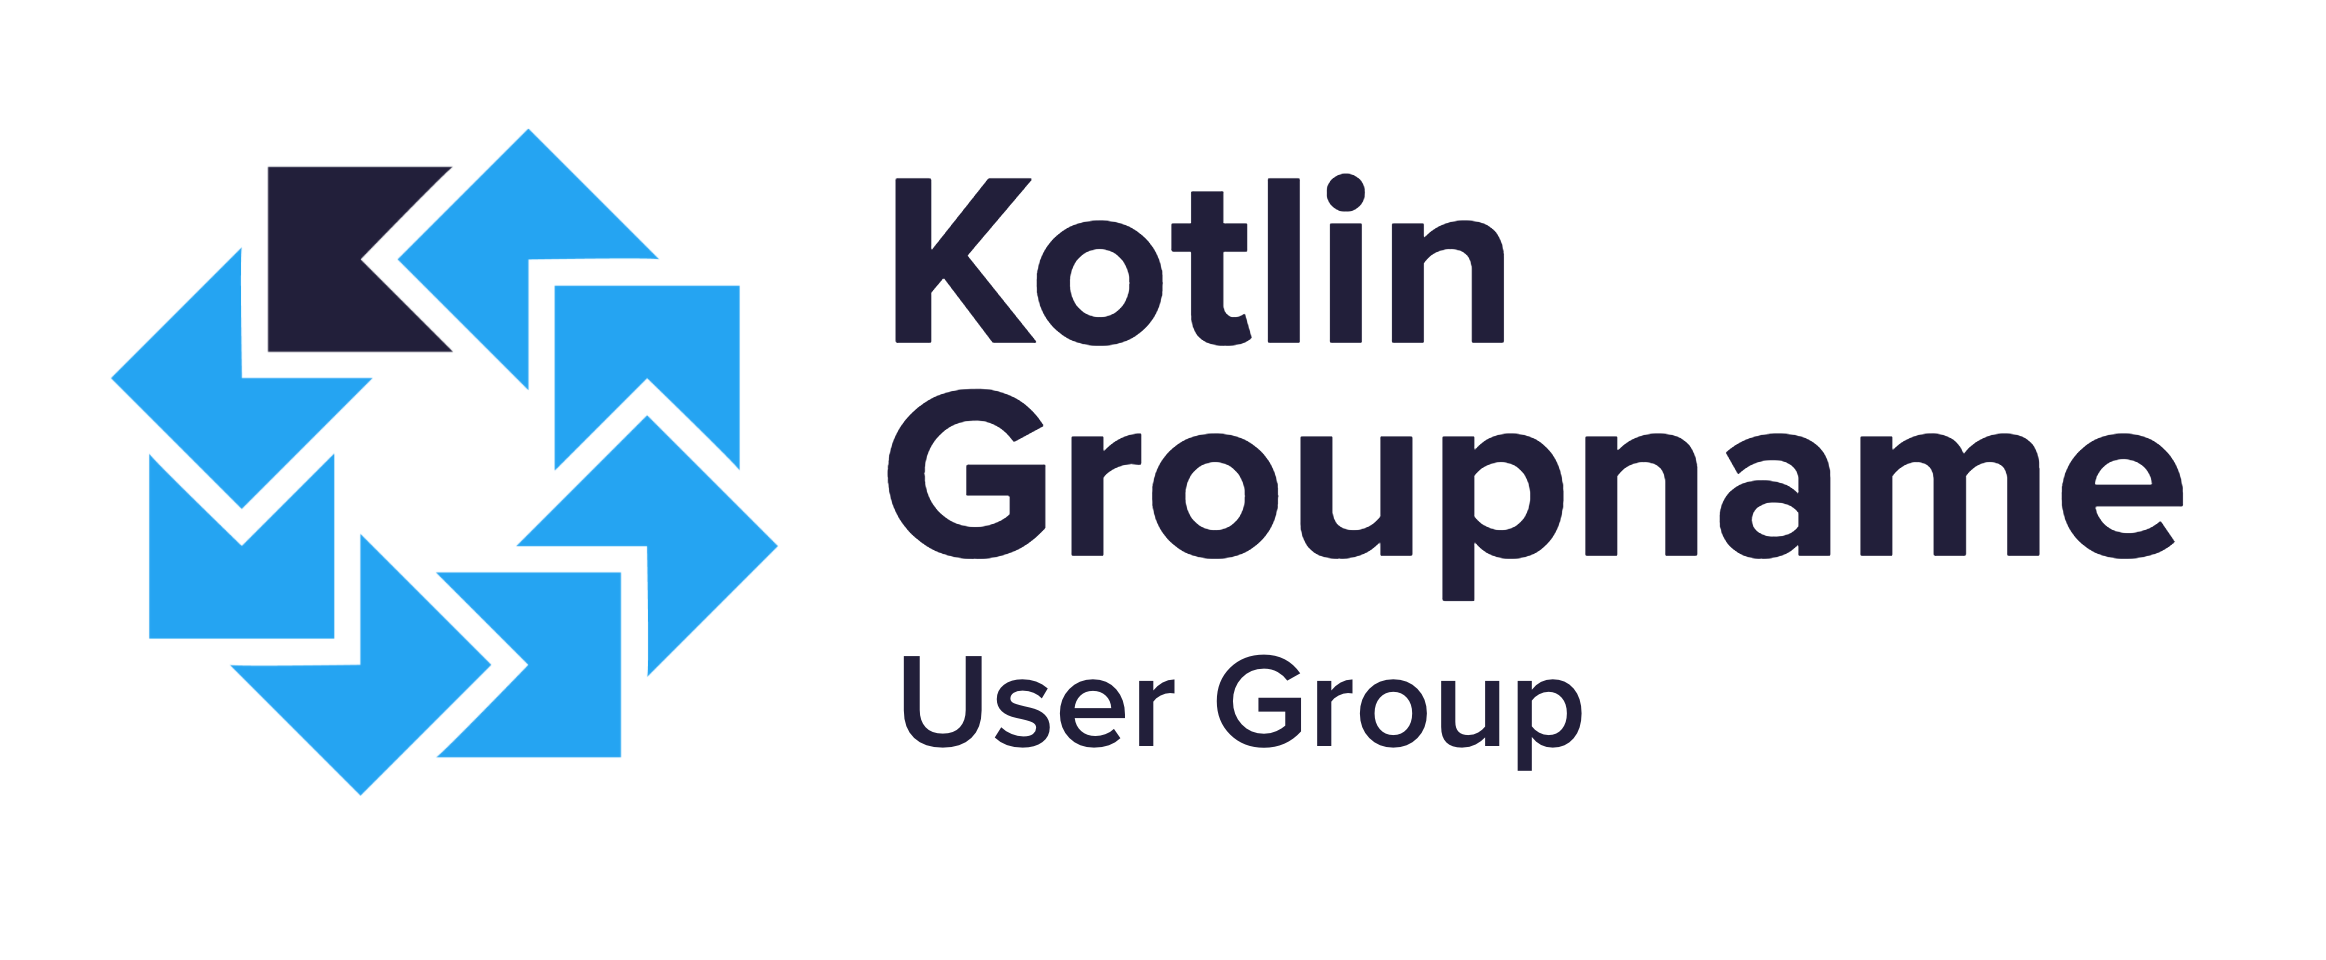 Kotlin Logo PNG - 177015